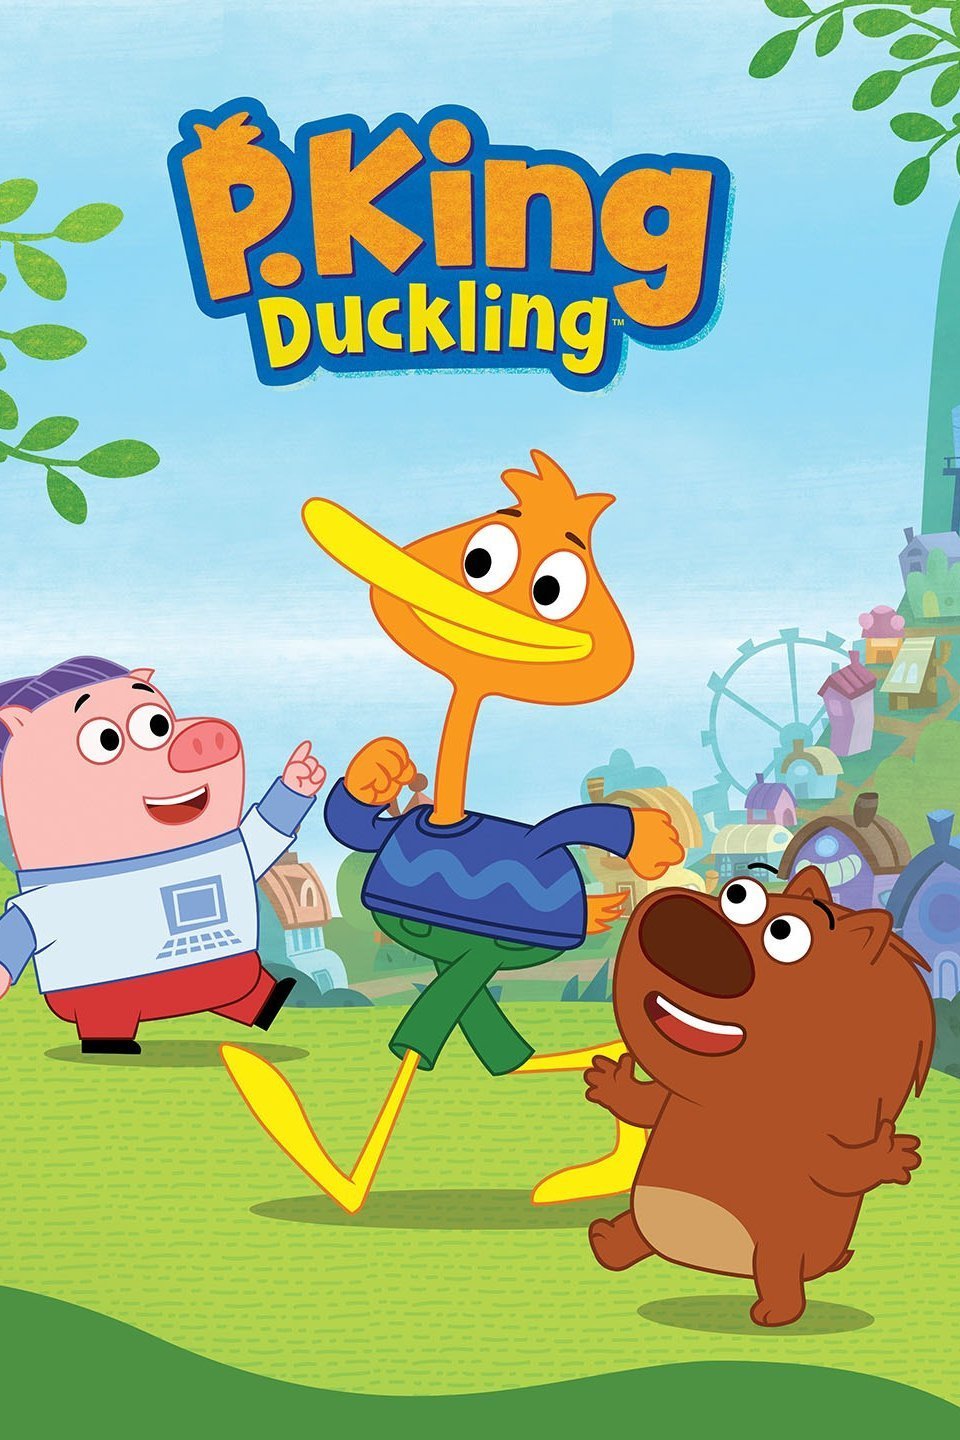 L'affiche du film P. King Duckling